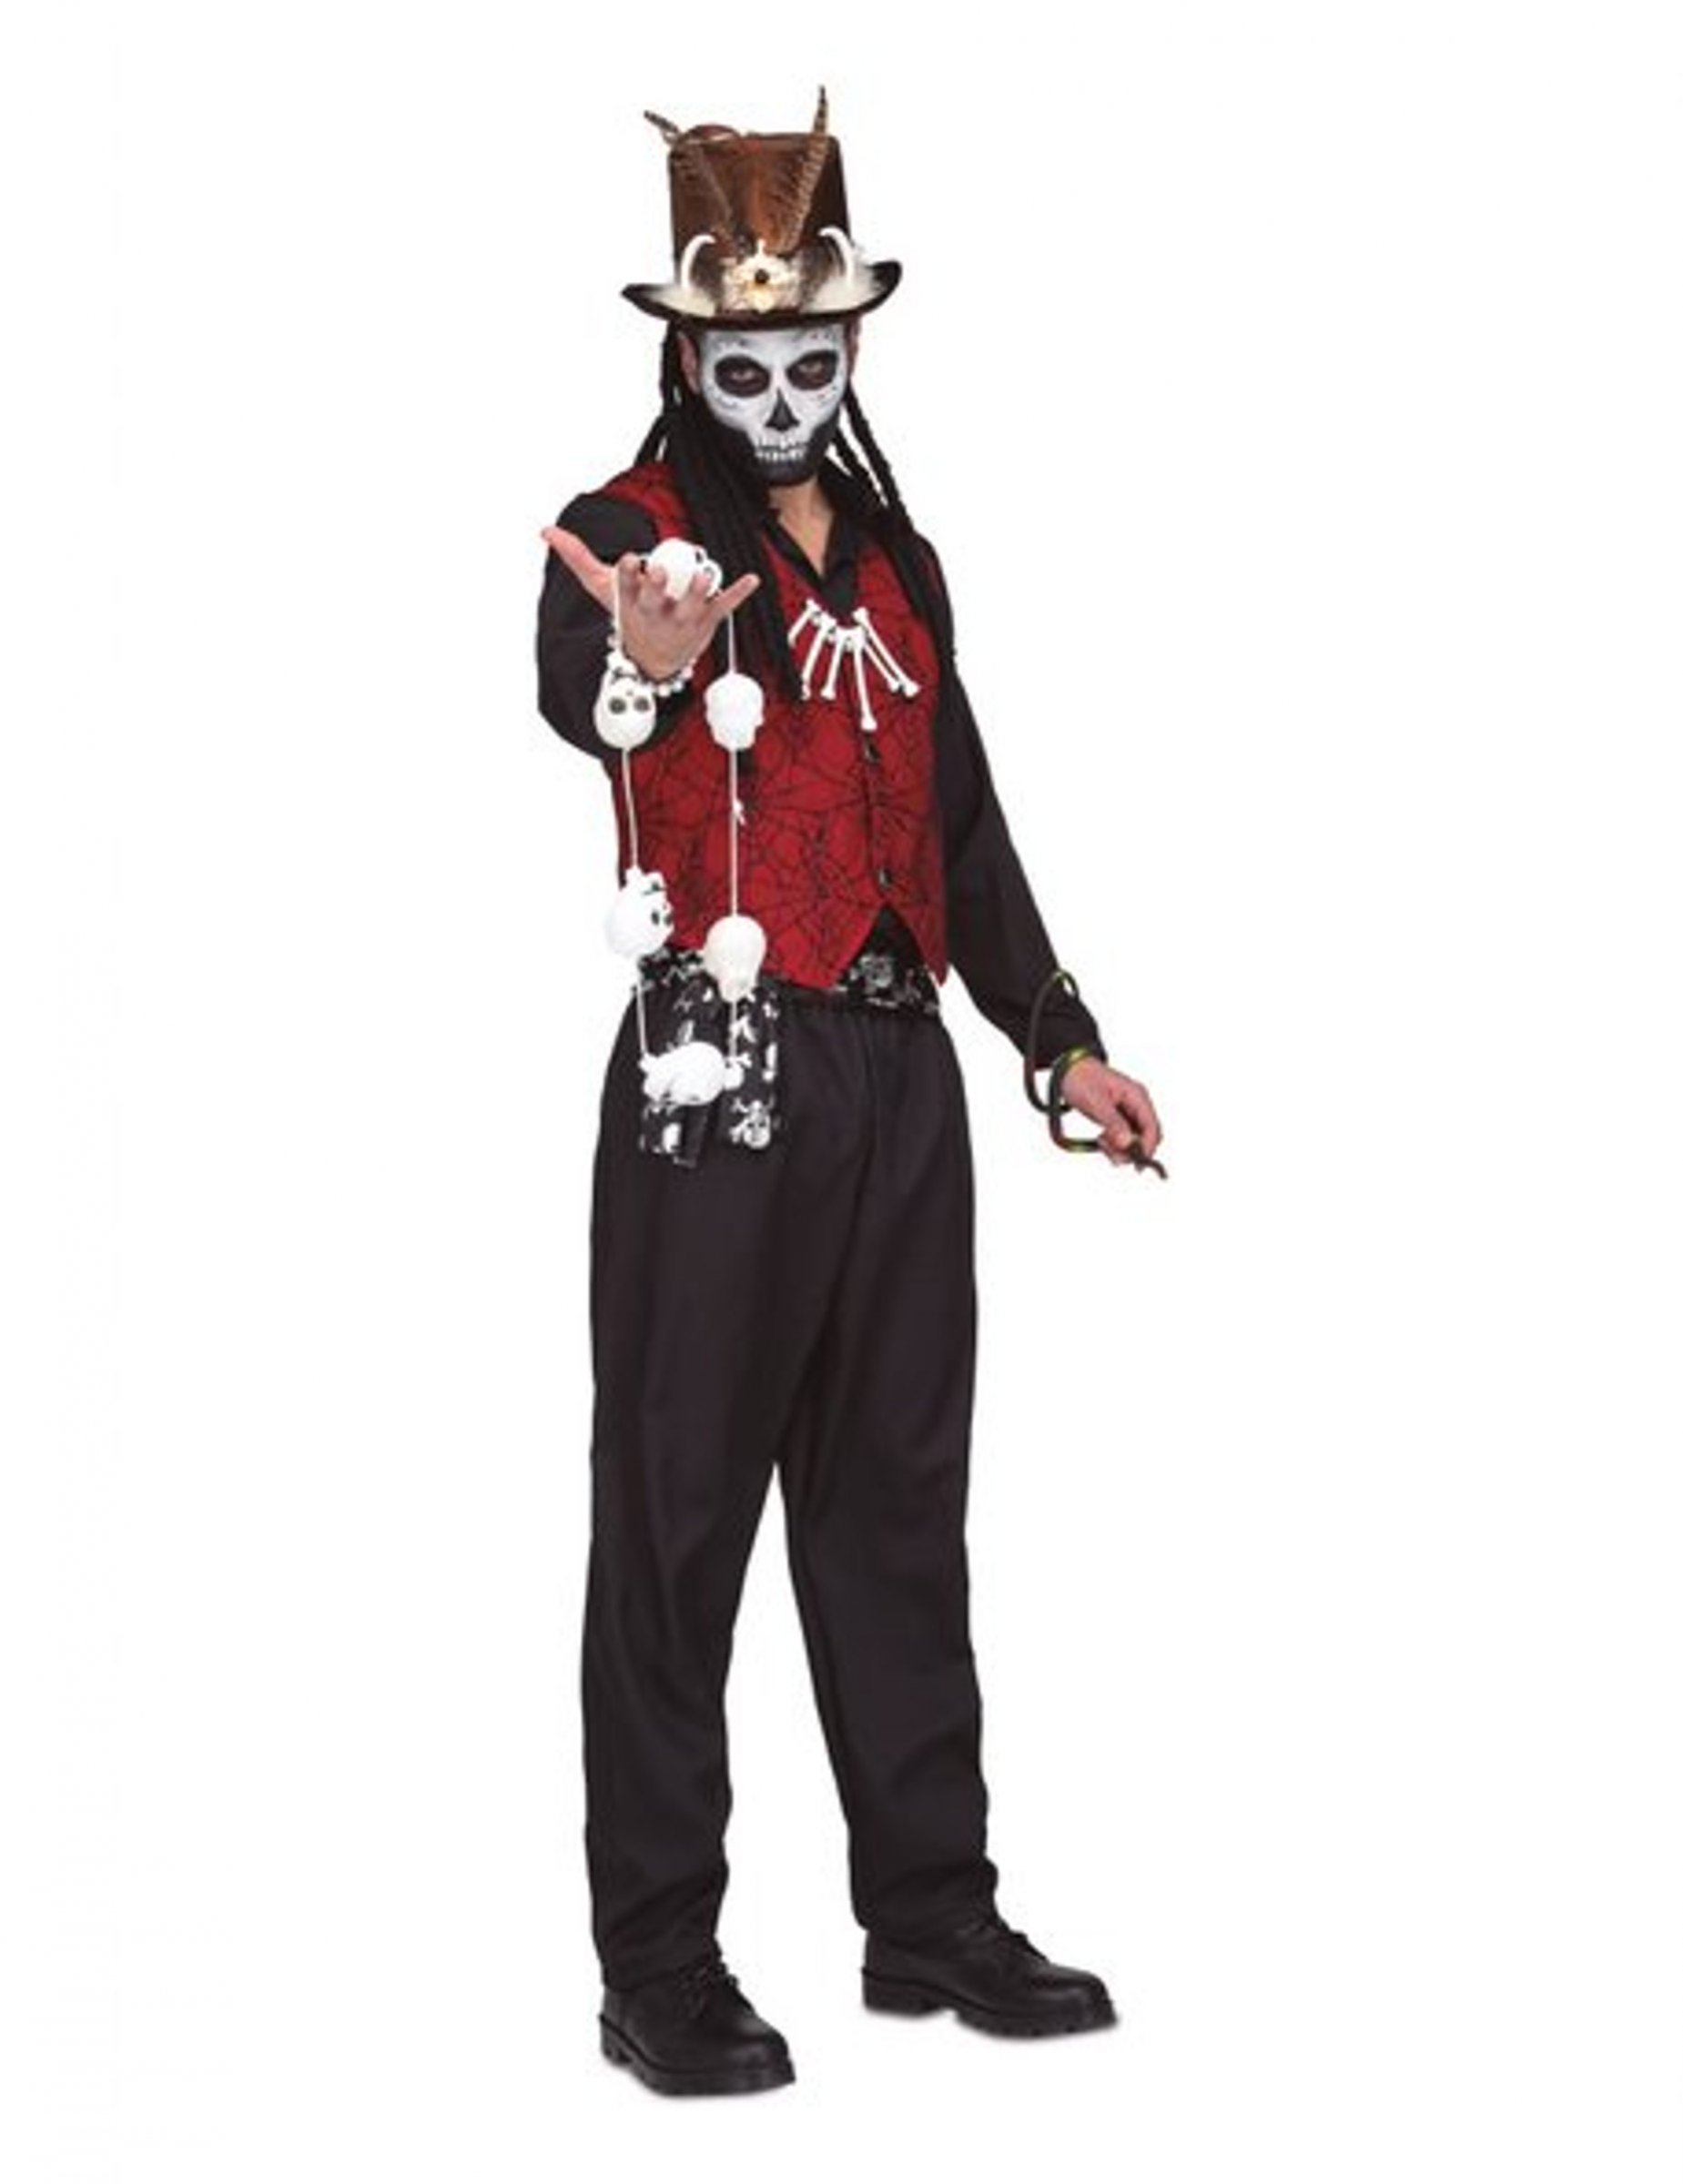 Voodoo-Kostüm für Herren Voodoo-Priester Halloween-Kostüm rot-schwarz von VIVING COSTUMES / JUINSA